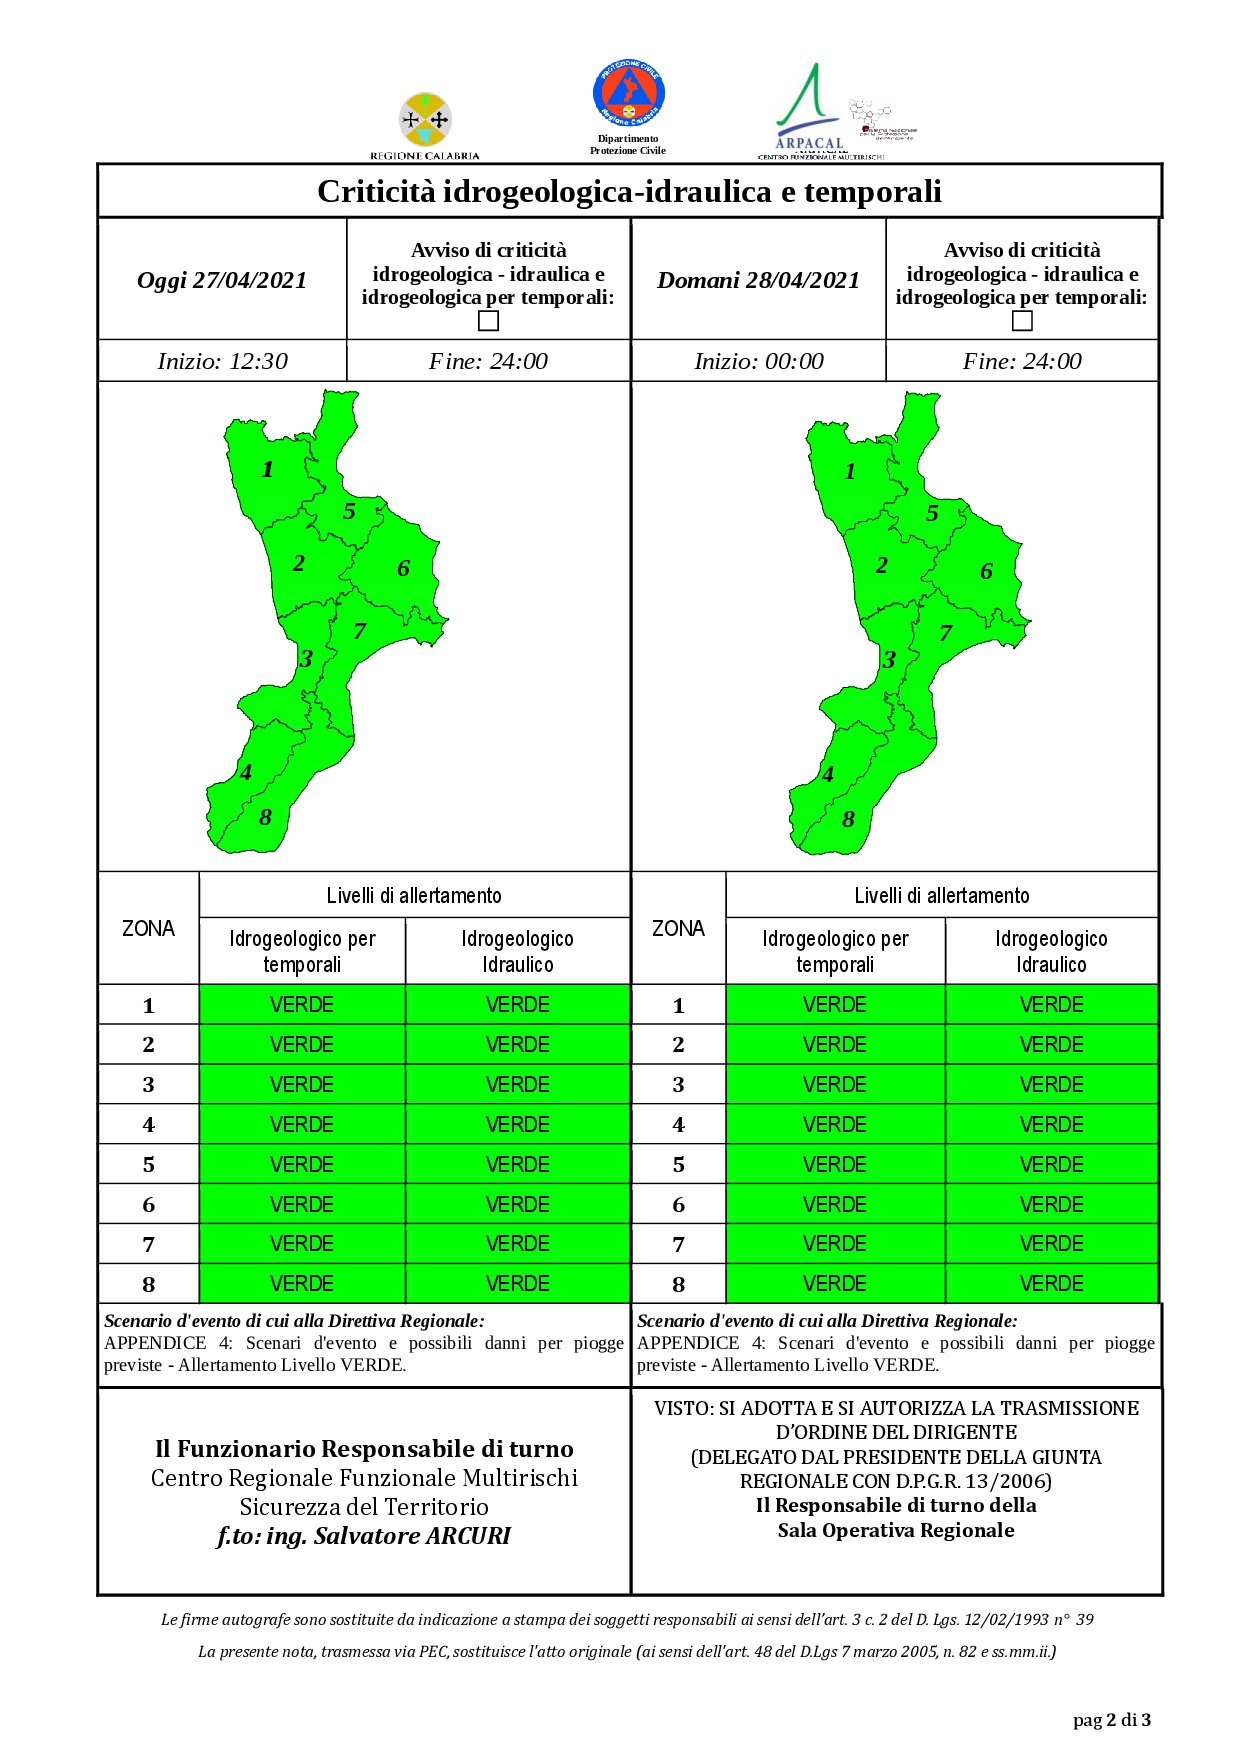 Criticità idrogeologica-idraulica e temporali in Calabria 27-04-2021